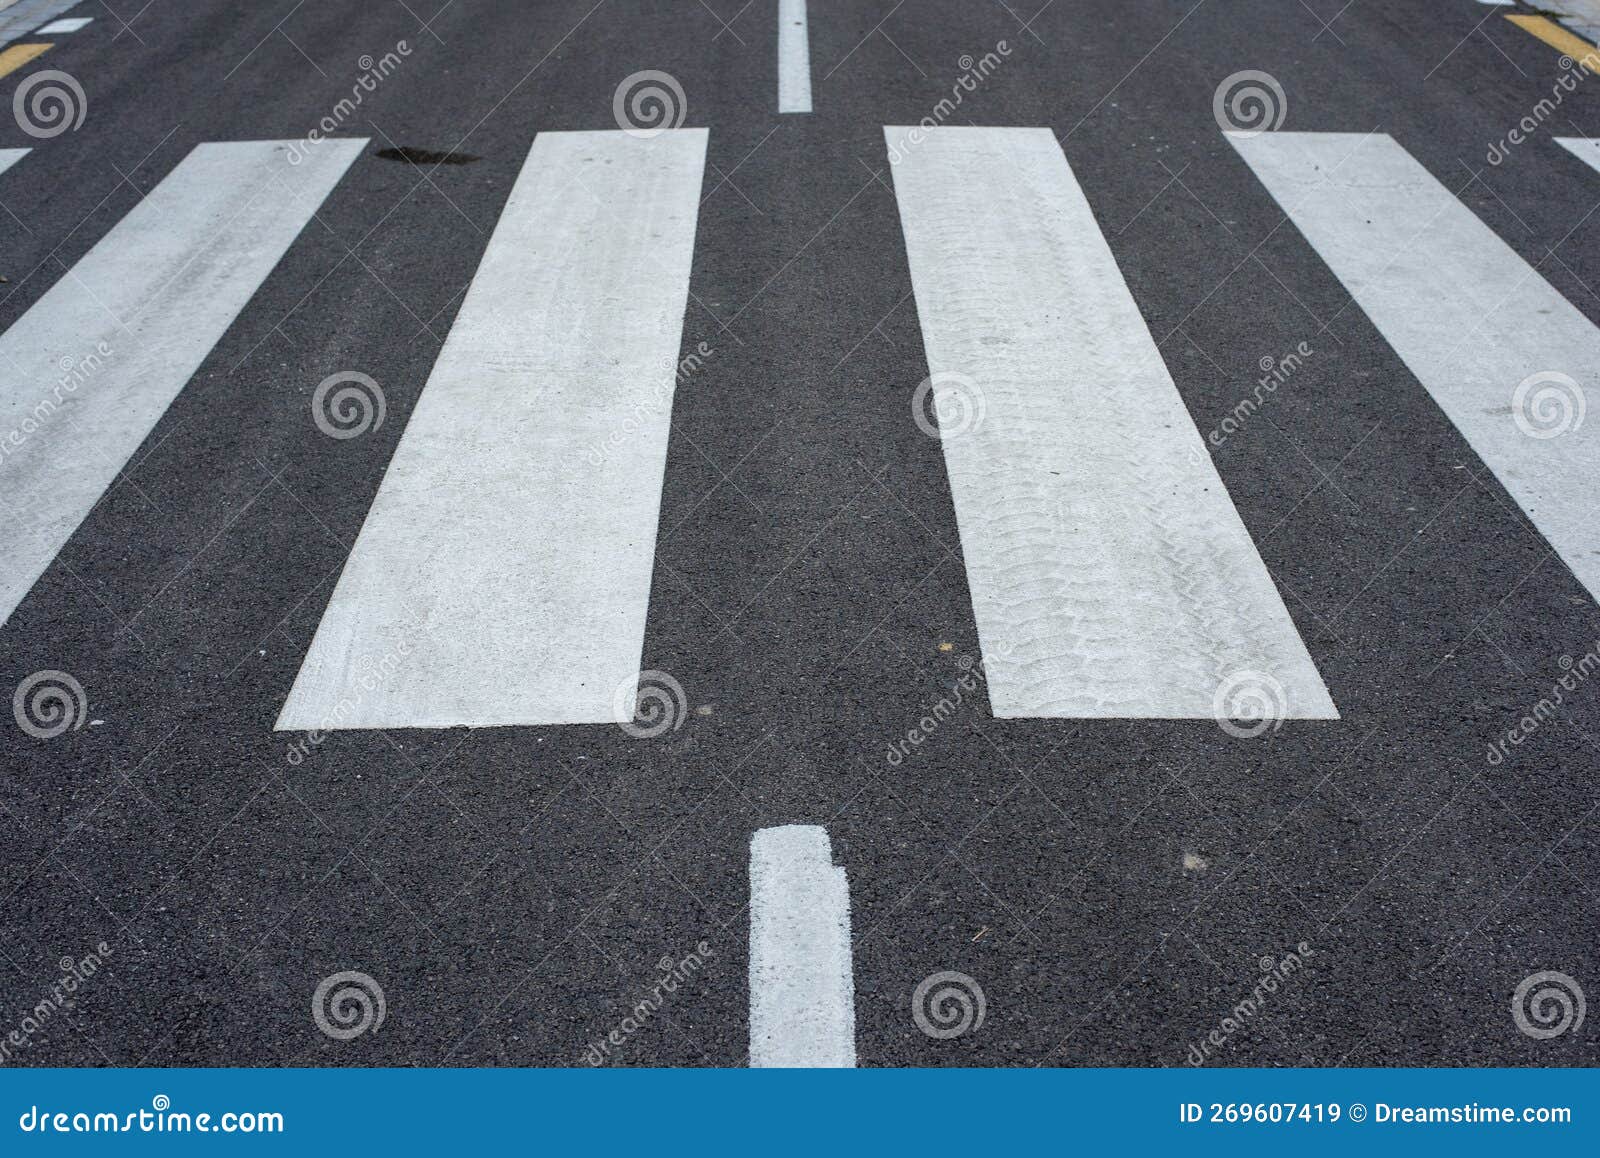 zebra crossing painted on the asphalt of a street